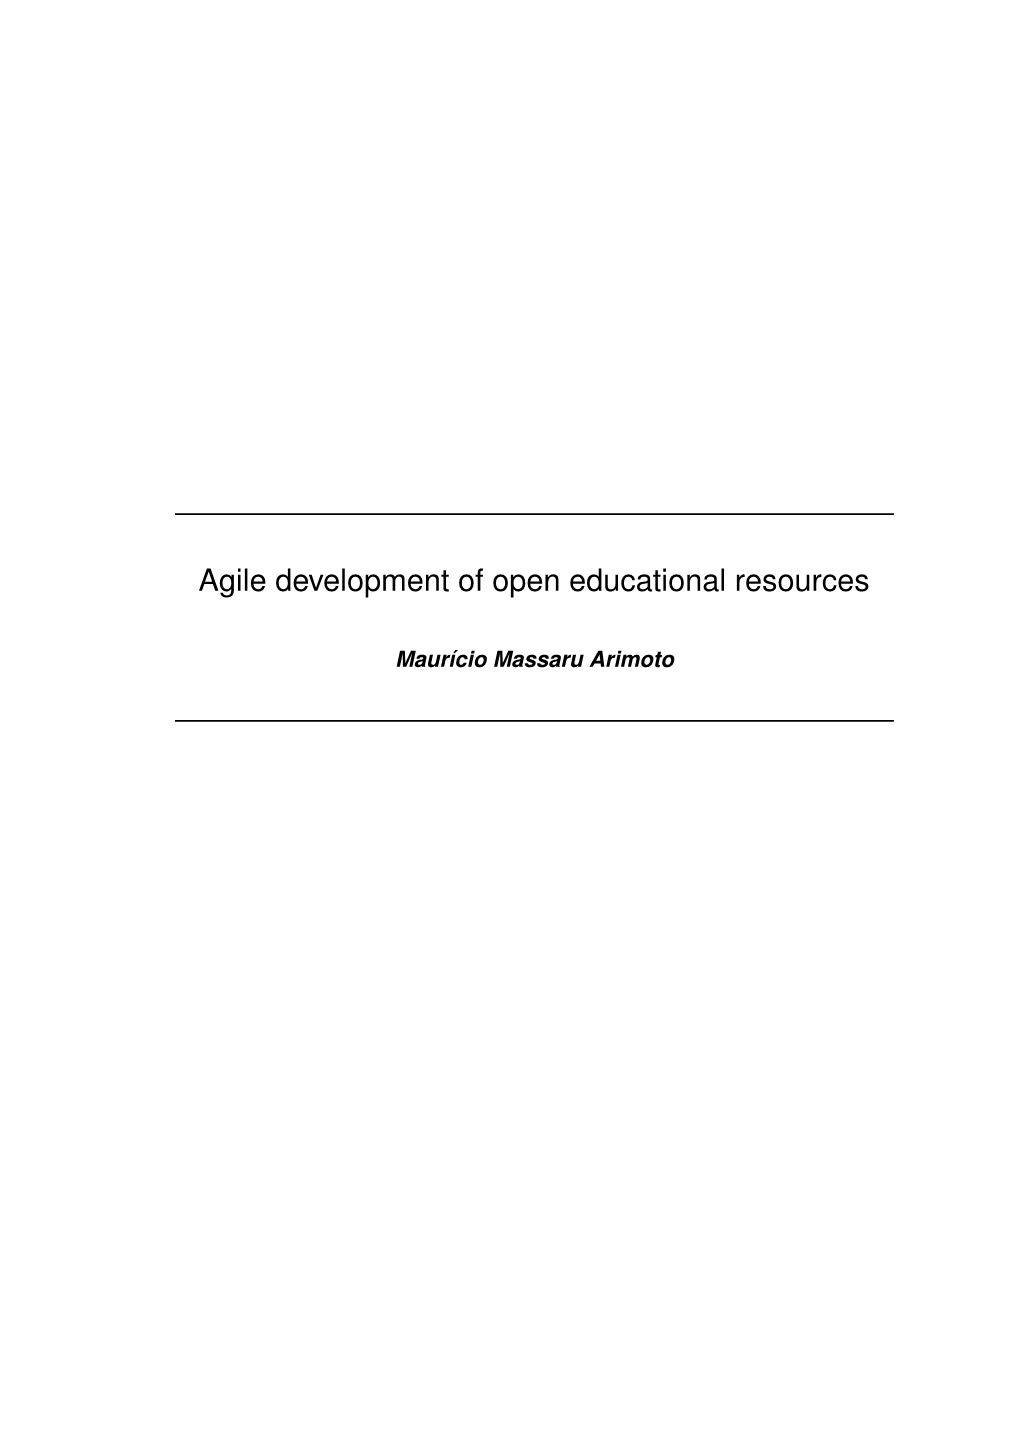 Agile Development of Open Educational Resources